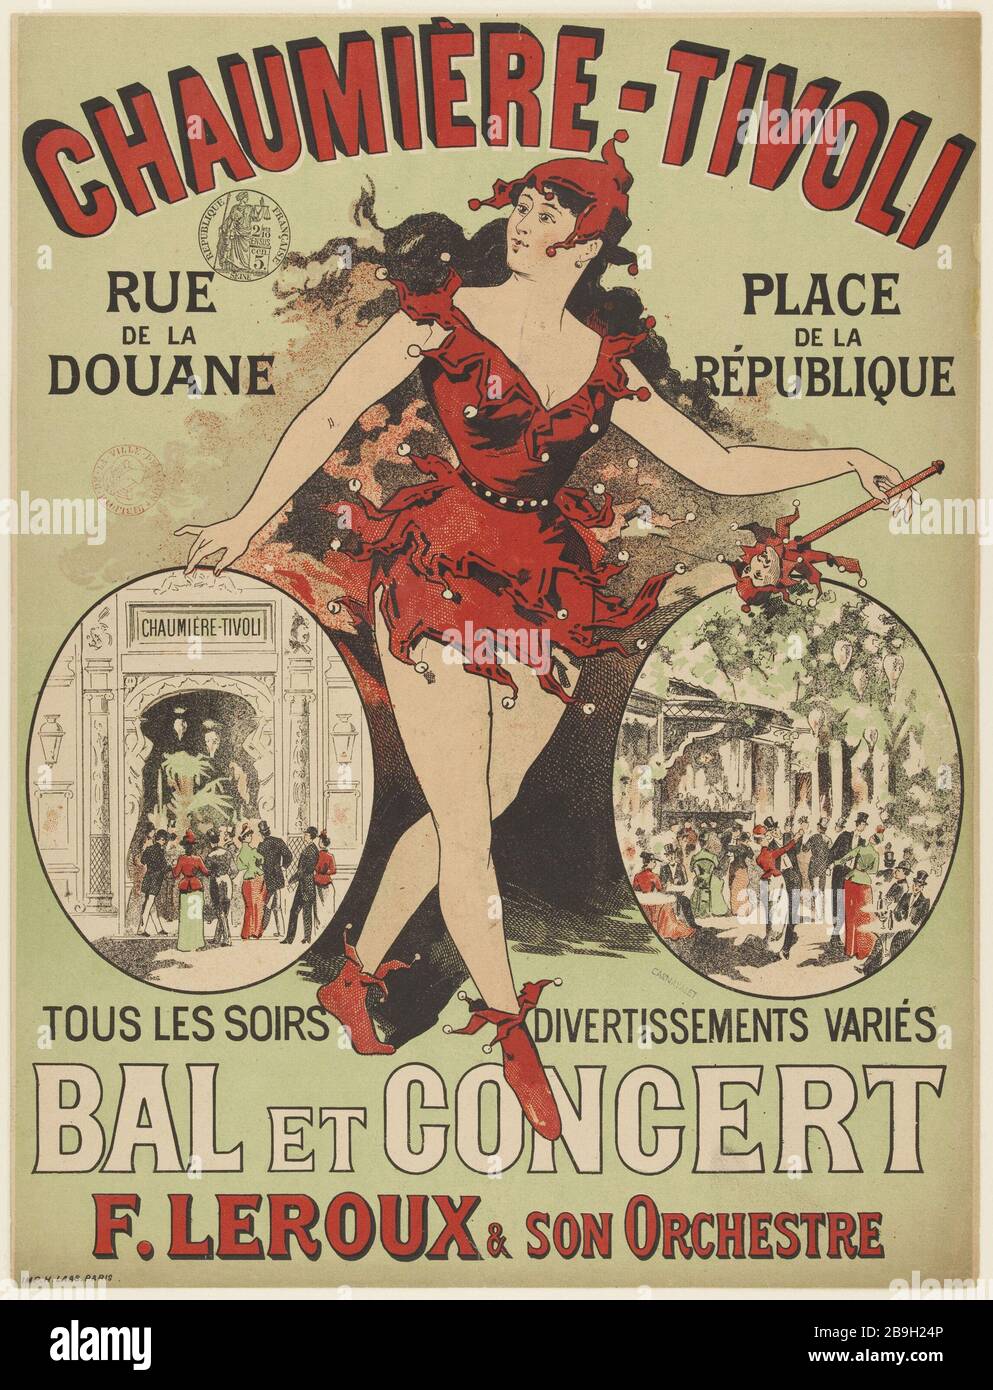 CHAUMIERE-TIVOLI, BAL and Concert Anonyme. 'Chaumière-Tivoli'. Lithographie. 1880-1900. Paris, musée Carnavalet. Stock Photo